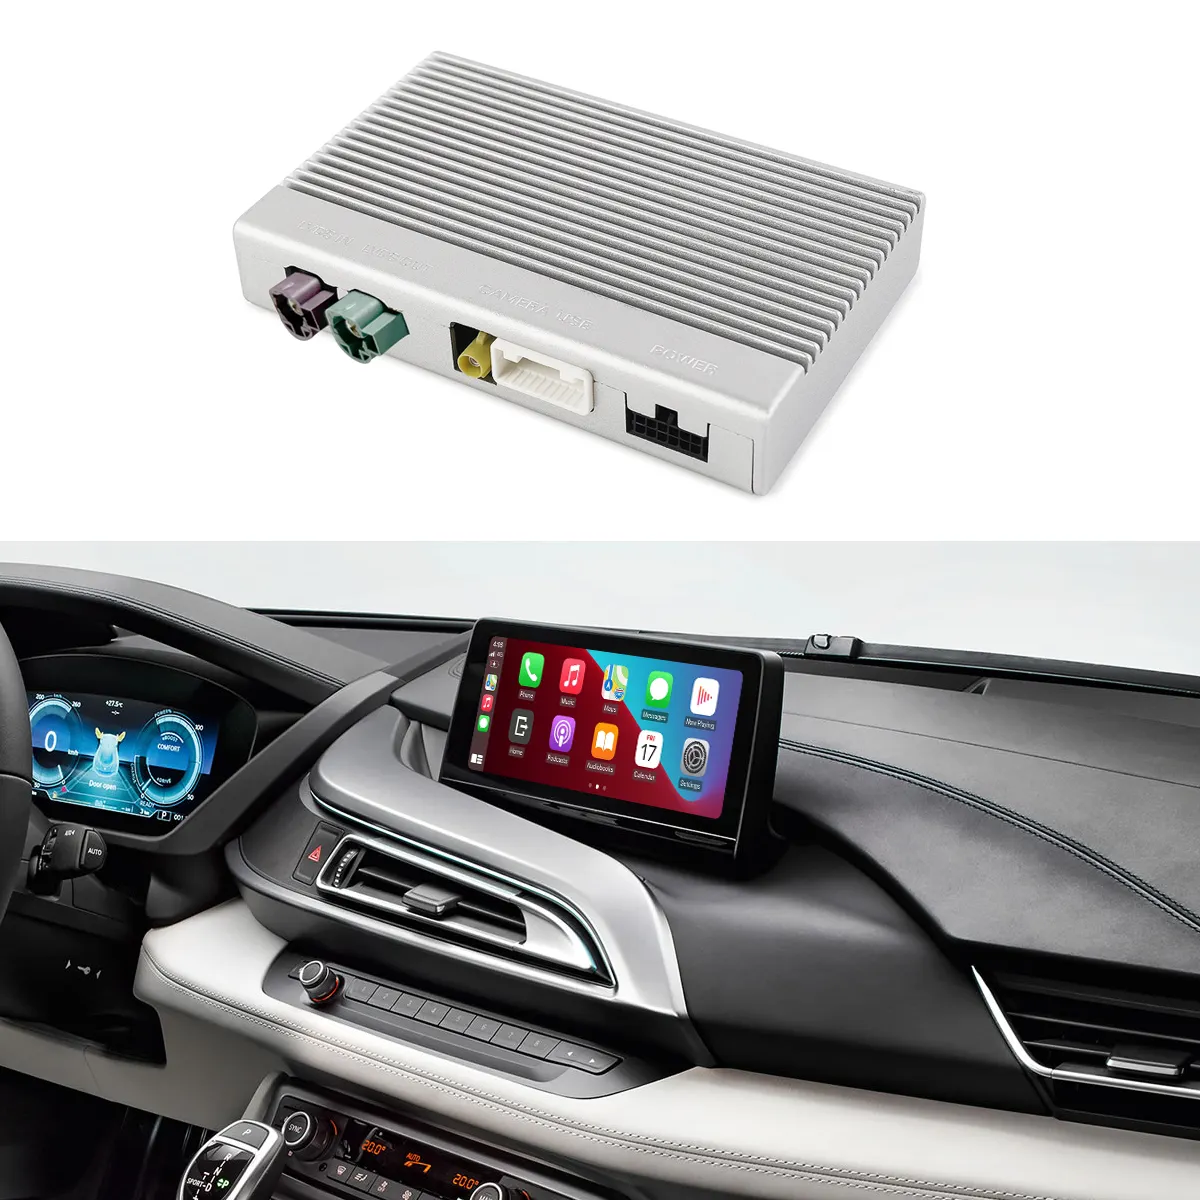 सड़क शीर्ष कार खेलने बॉक्स एंड्रॉयड ऑटो मल्टीमीडिया एप्पल बीएमडब्ल्यू के लिए Carplay इंटरफ़ेस उन्नयन स्मार्ट बॉक्स NBT i8 I12 2014-2018